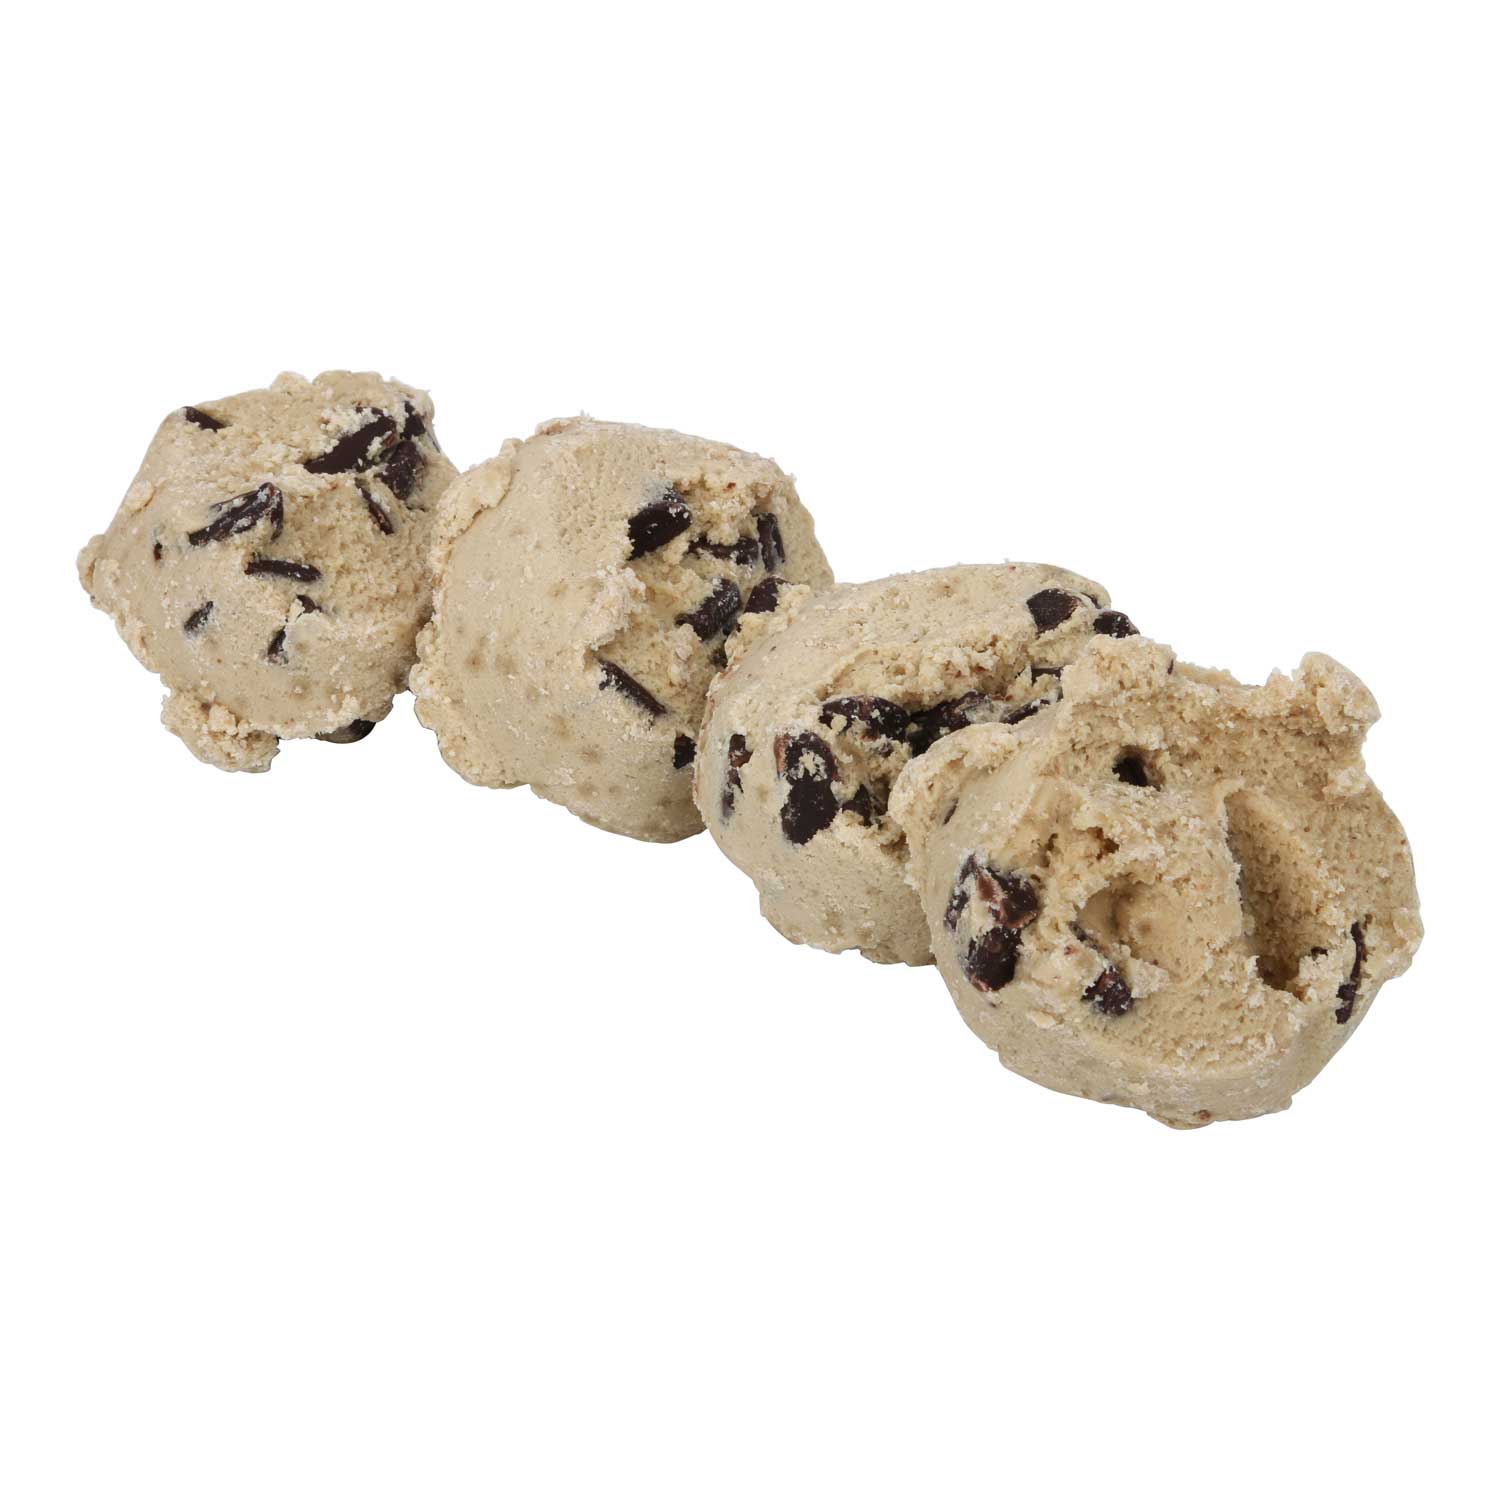 Otis Spunkmeyer 1.5 ounce Gourmet Chocolate Chunk Cookie Dough , 5 Pound Bag -- 4 Bags per case.